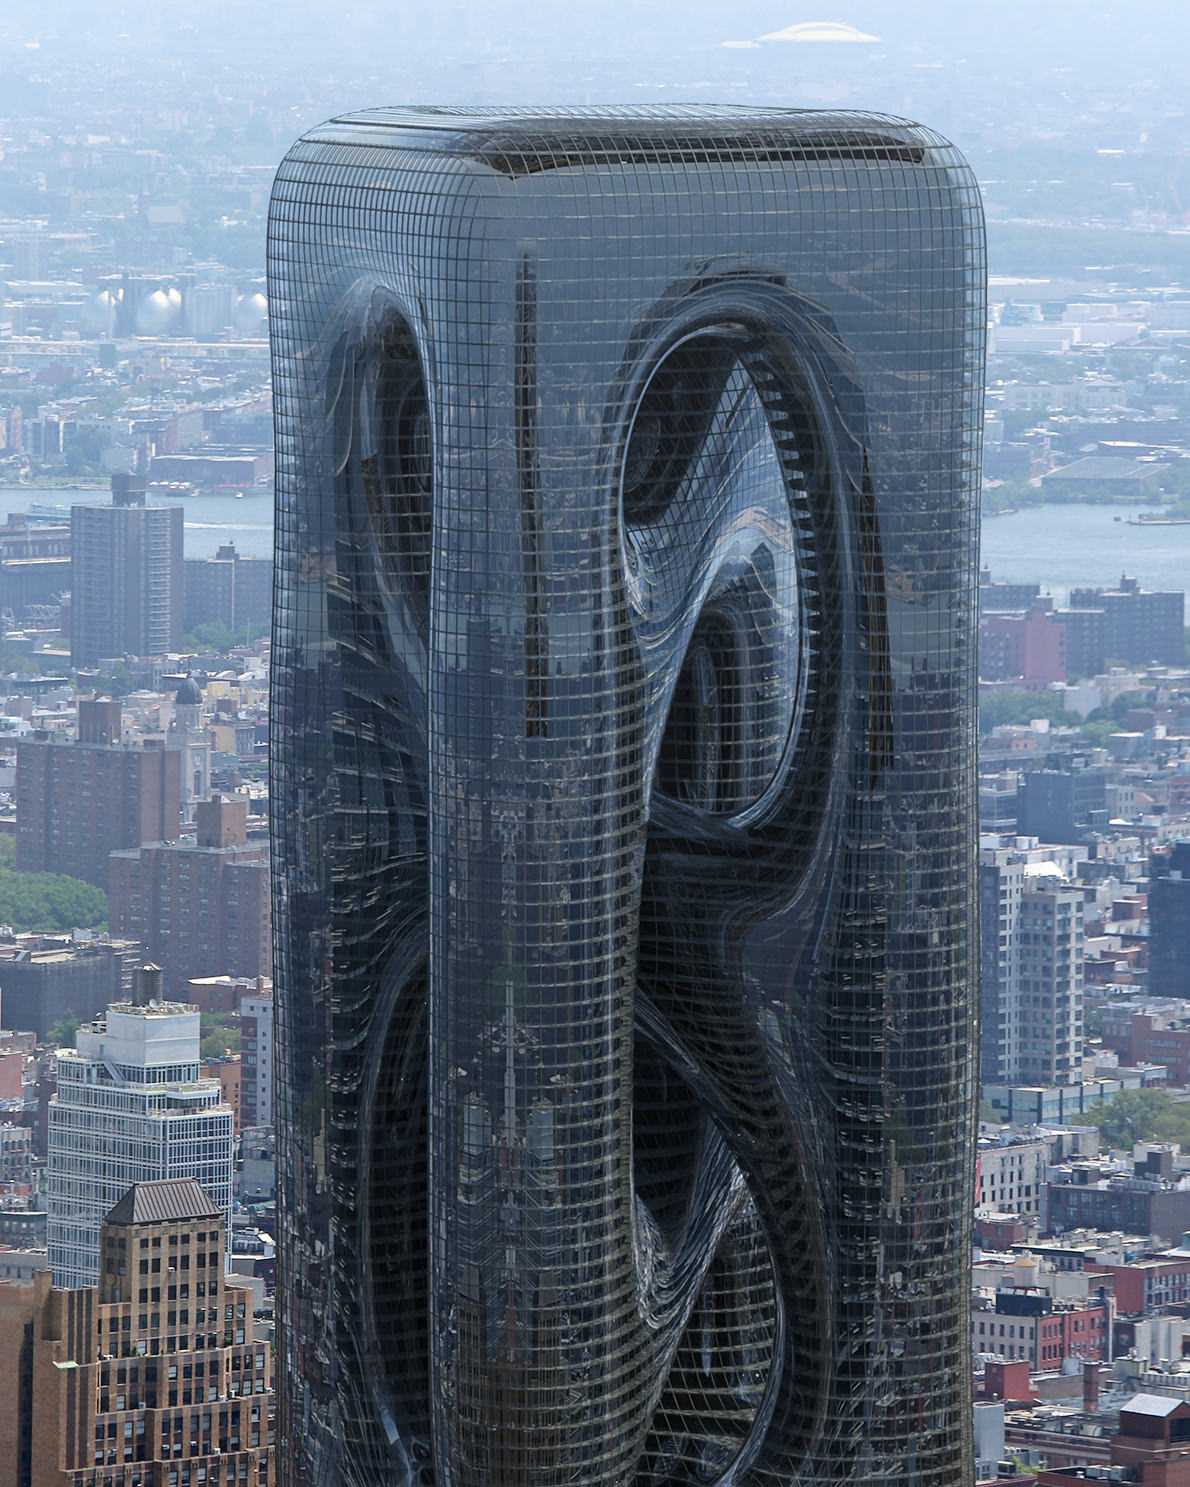 Sarcostyle tower by Hayri Atak Architectural Design Studio